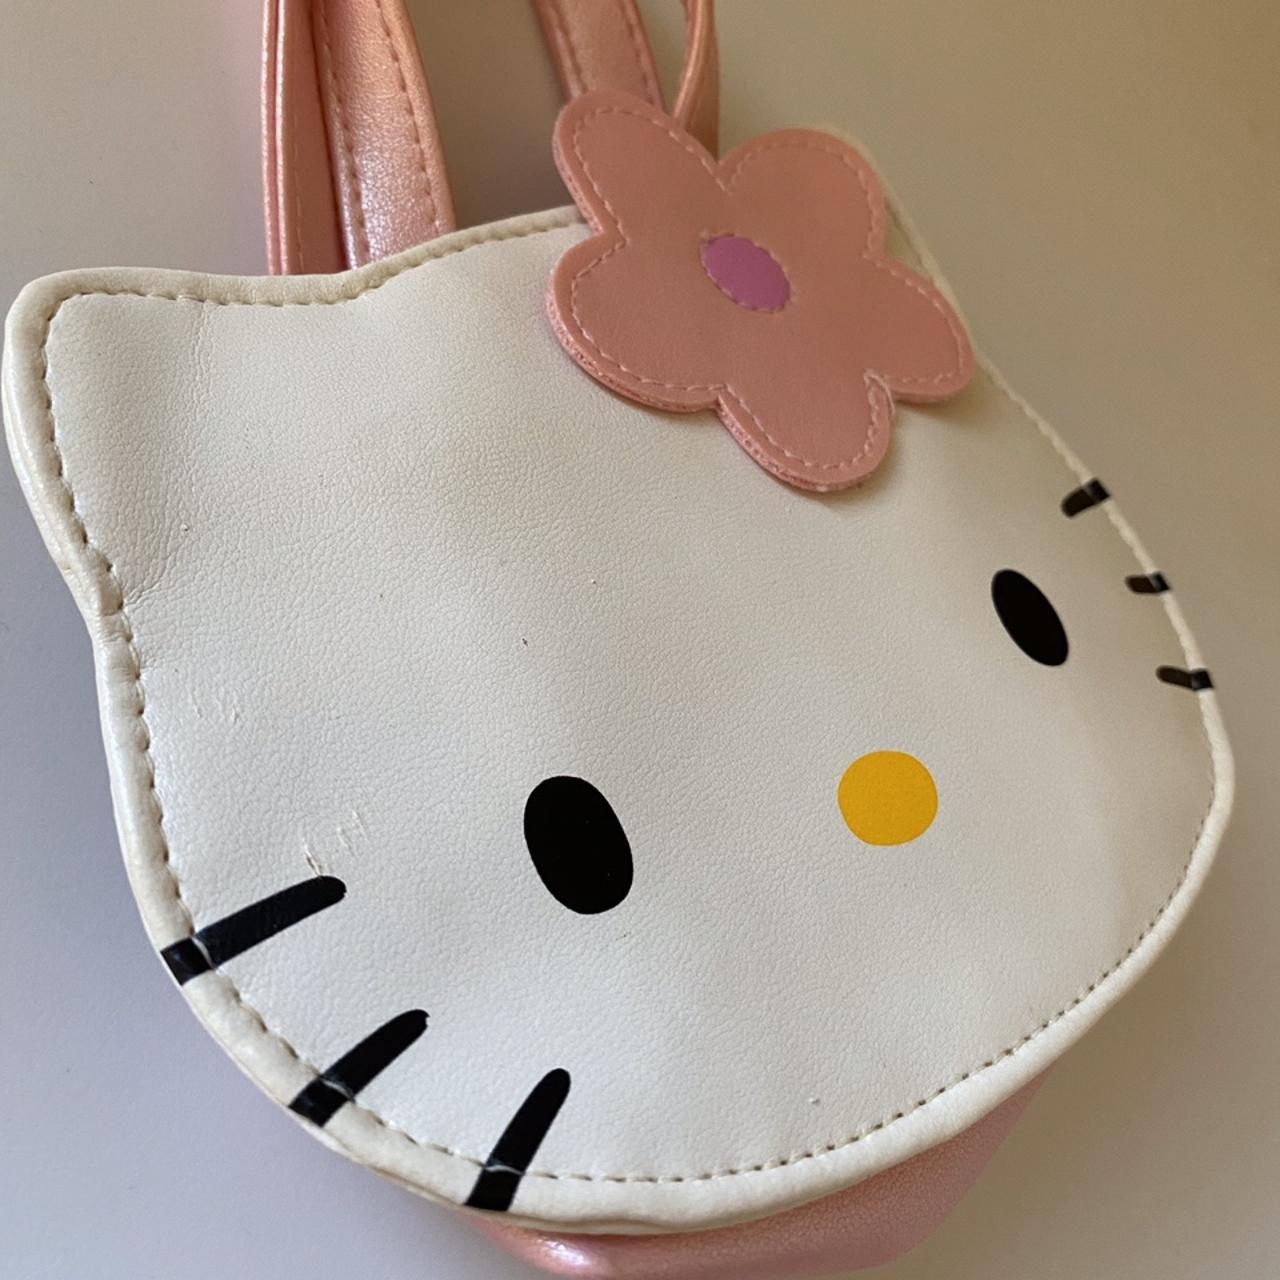 Brand new Hello kitty purse Small cute purse - Depop